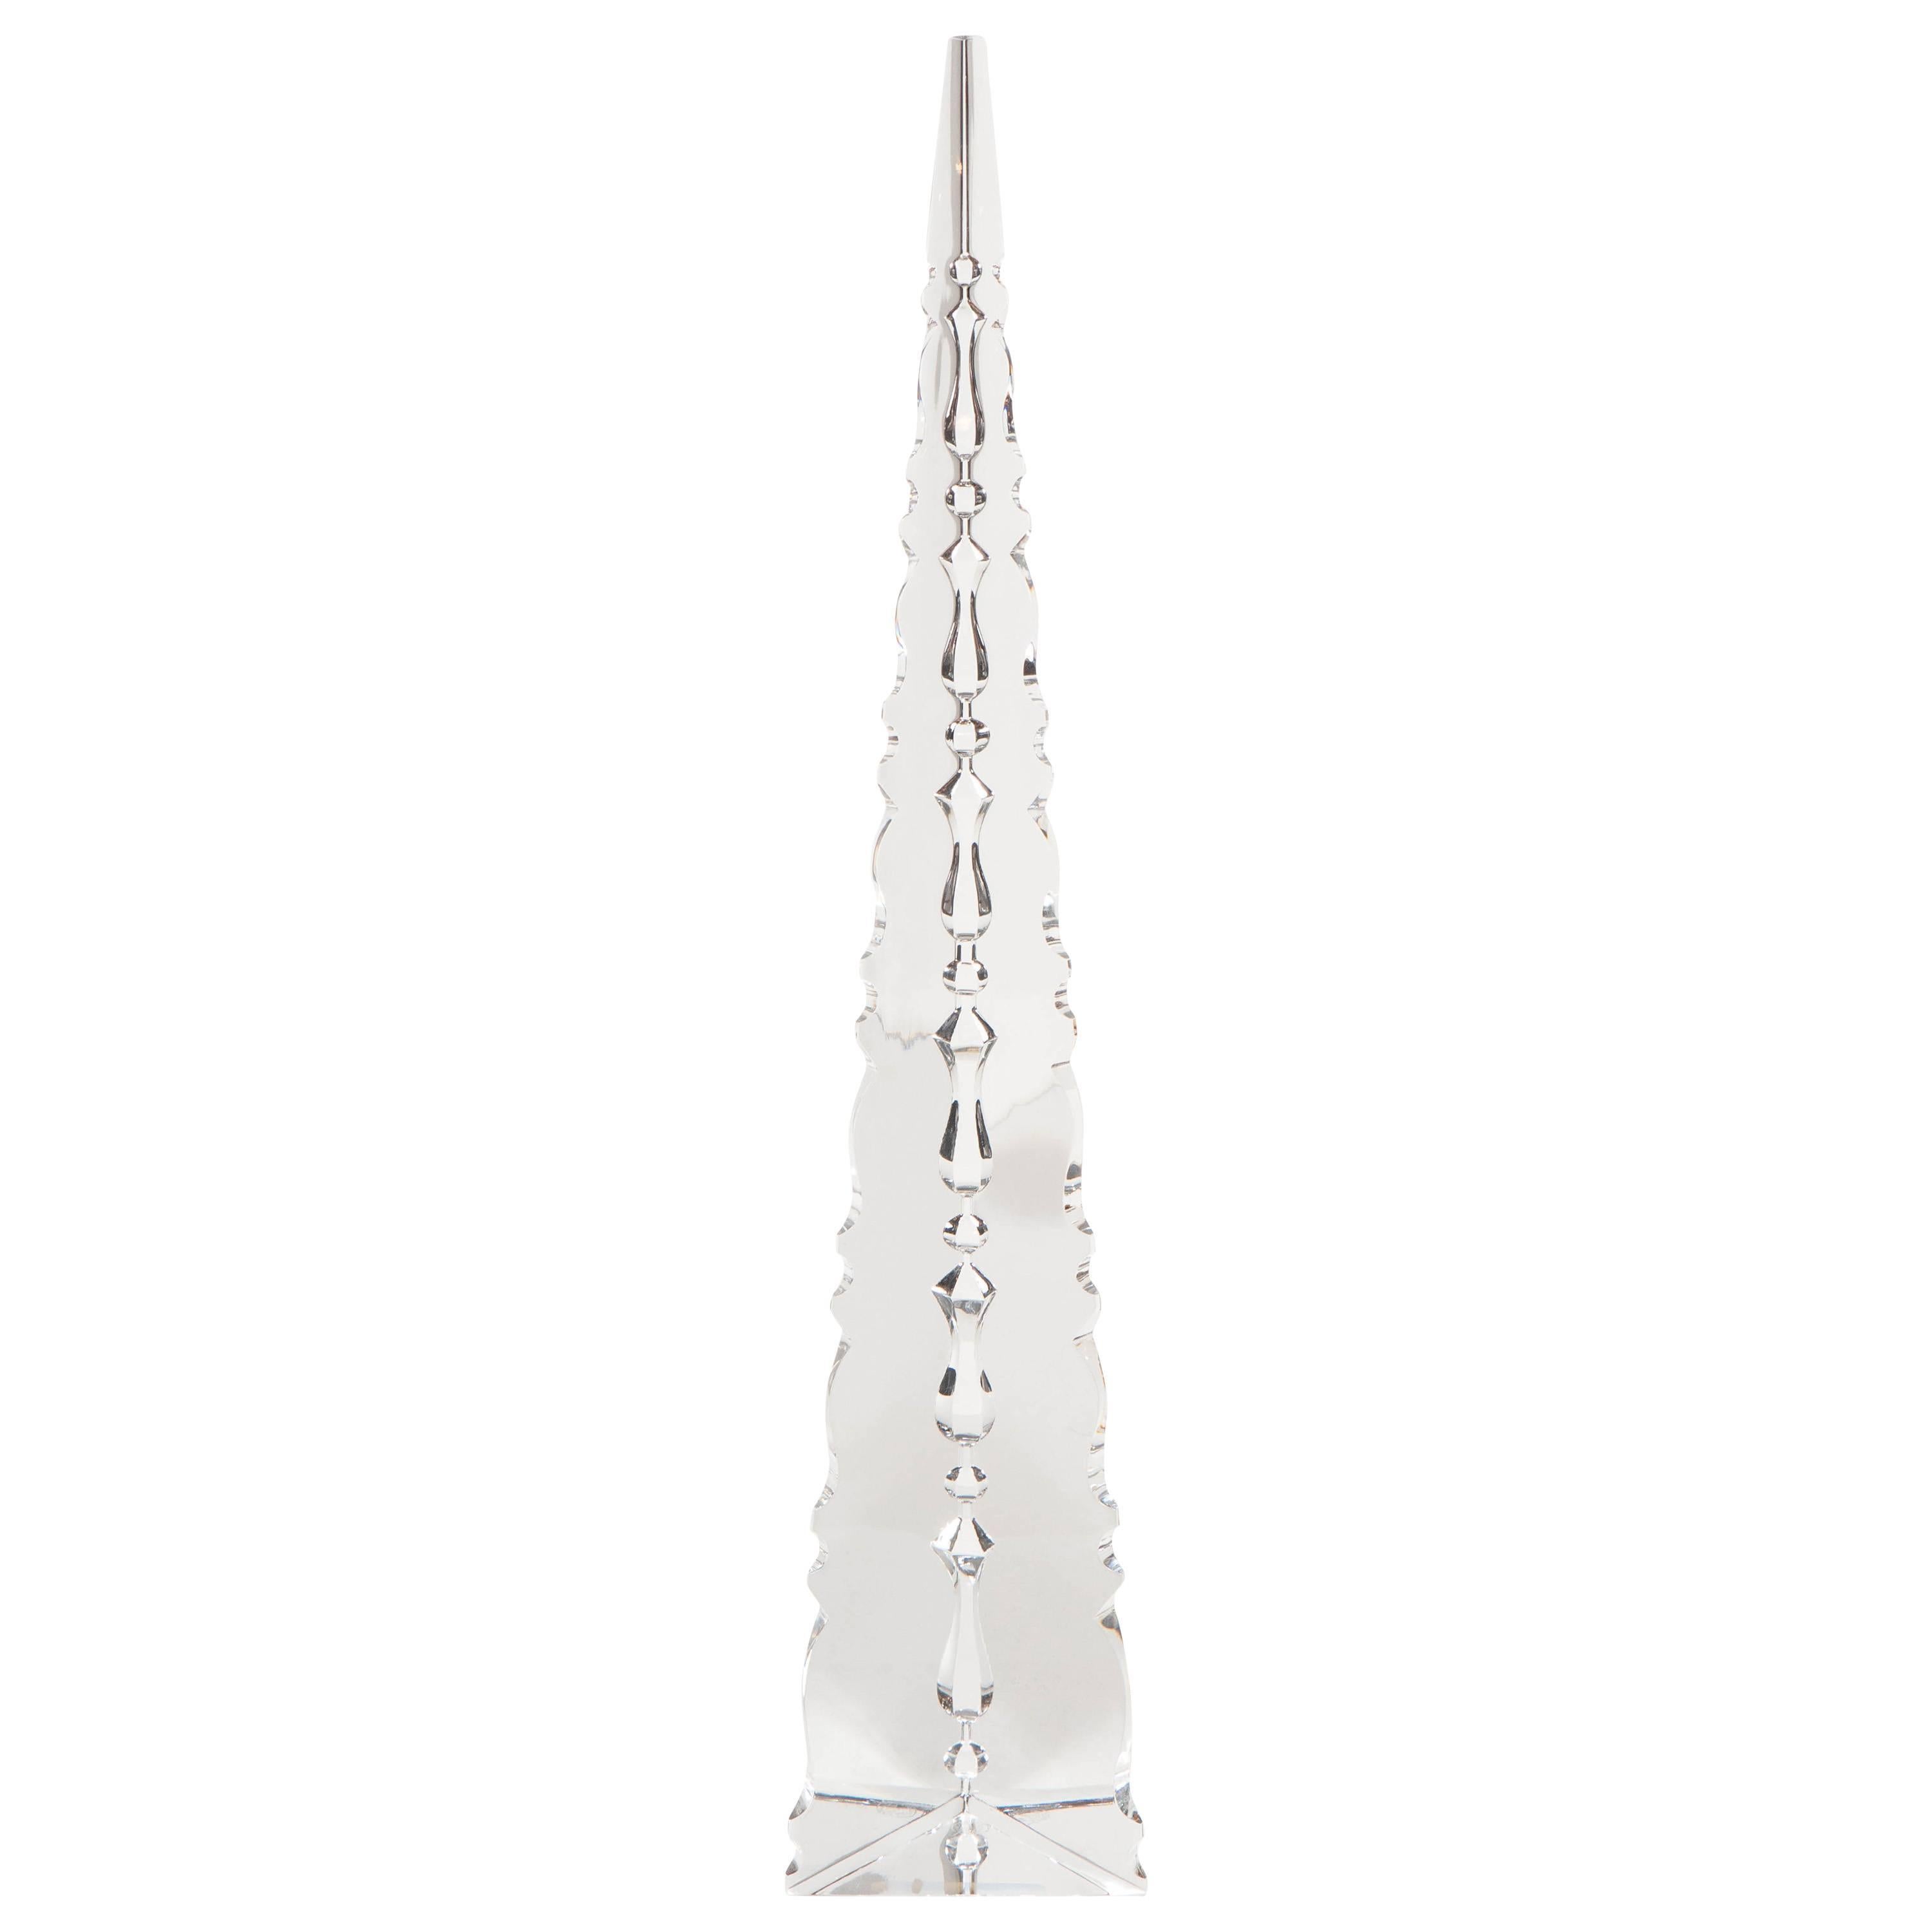 Exquisite Mid-Century Modernist Fine Cut Crystal Obelisk by Baccarat 